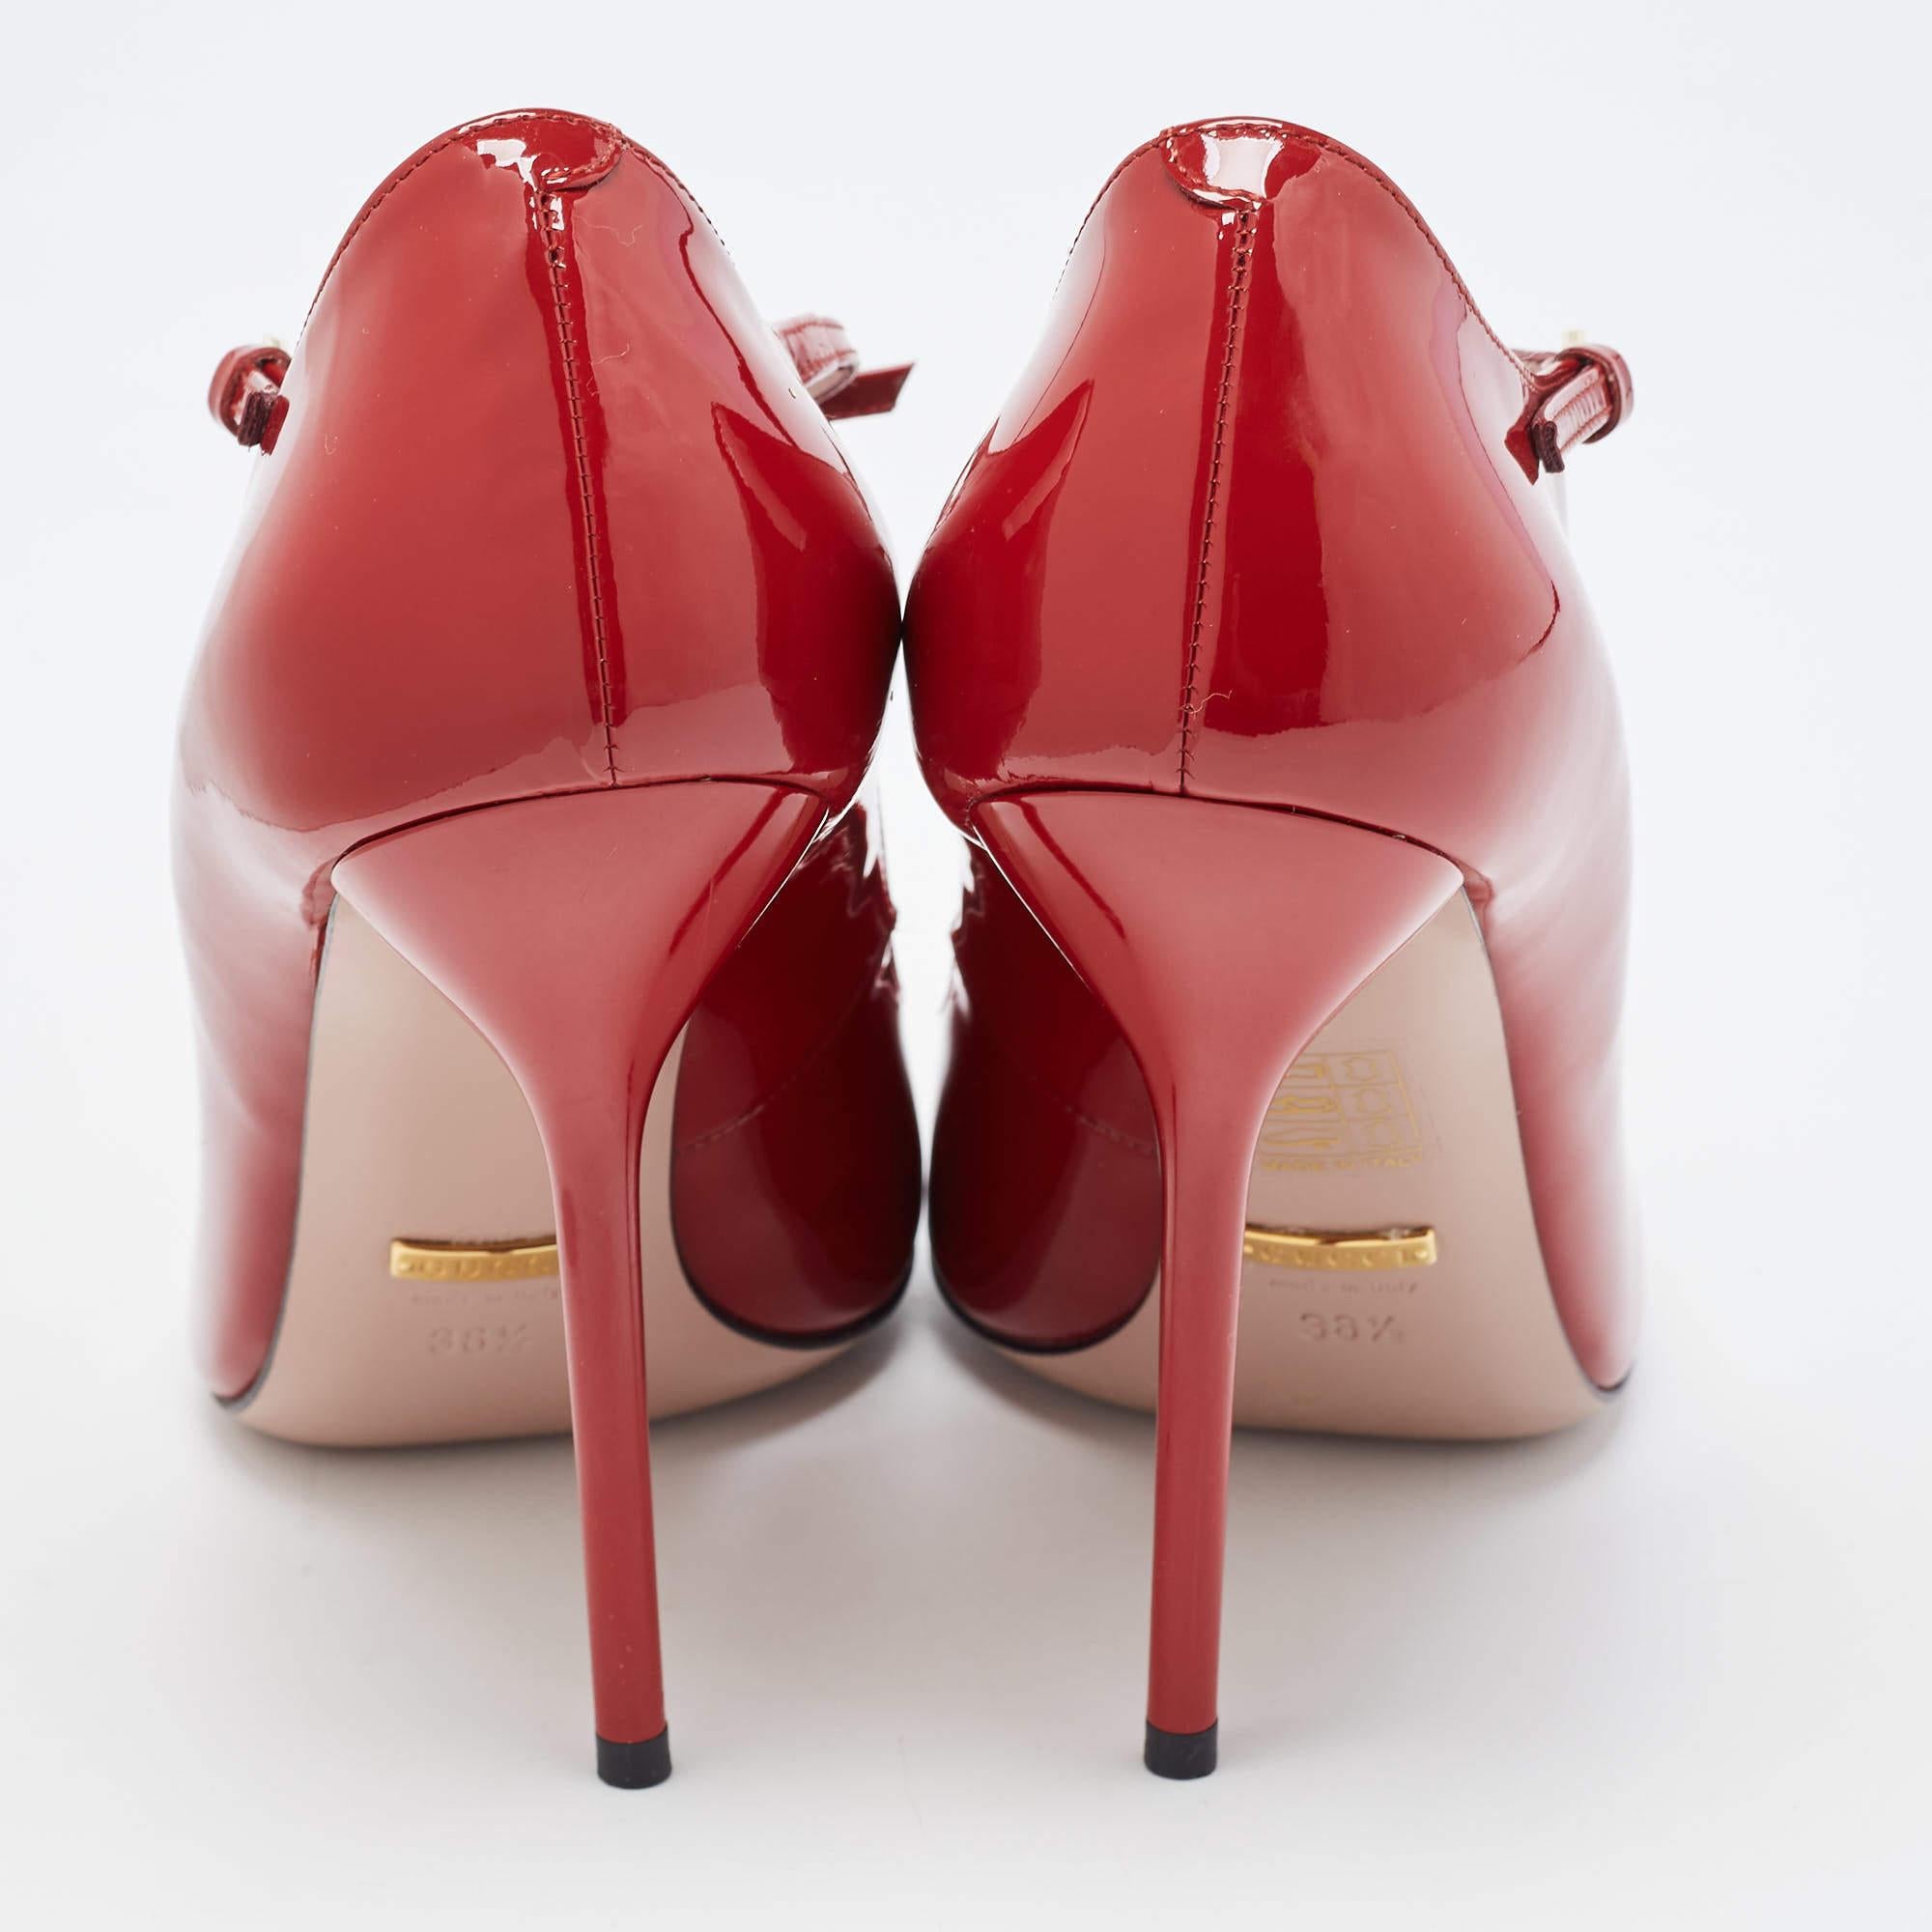 Gucci Red Patent Leather Bow Accents T-Strap Pumps Size 38.5 In Good Condition For Sale In Dubai, Al Qouz 2